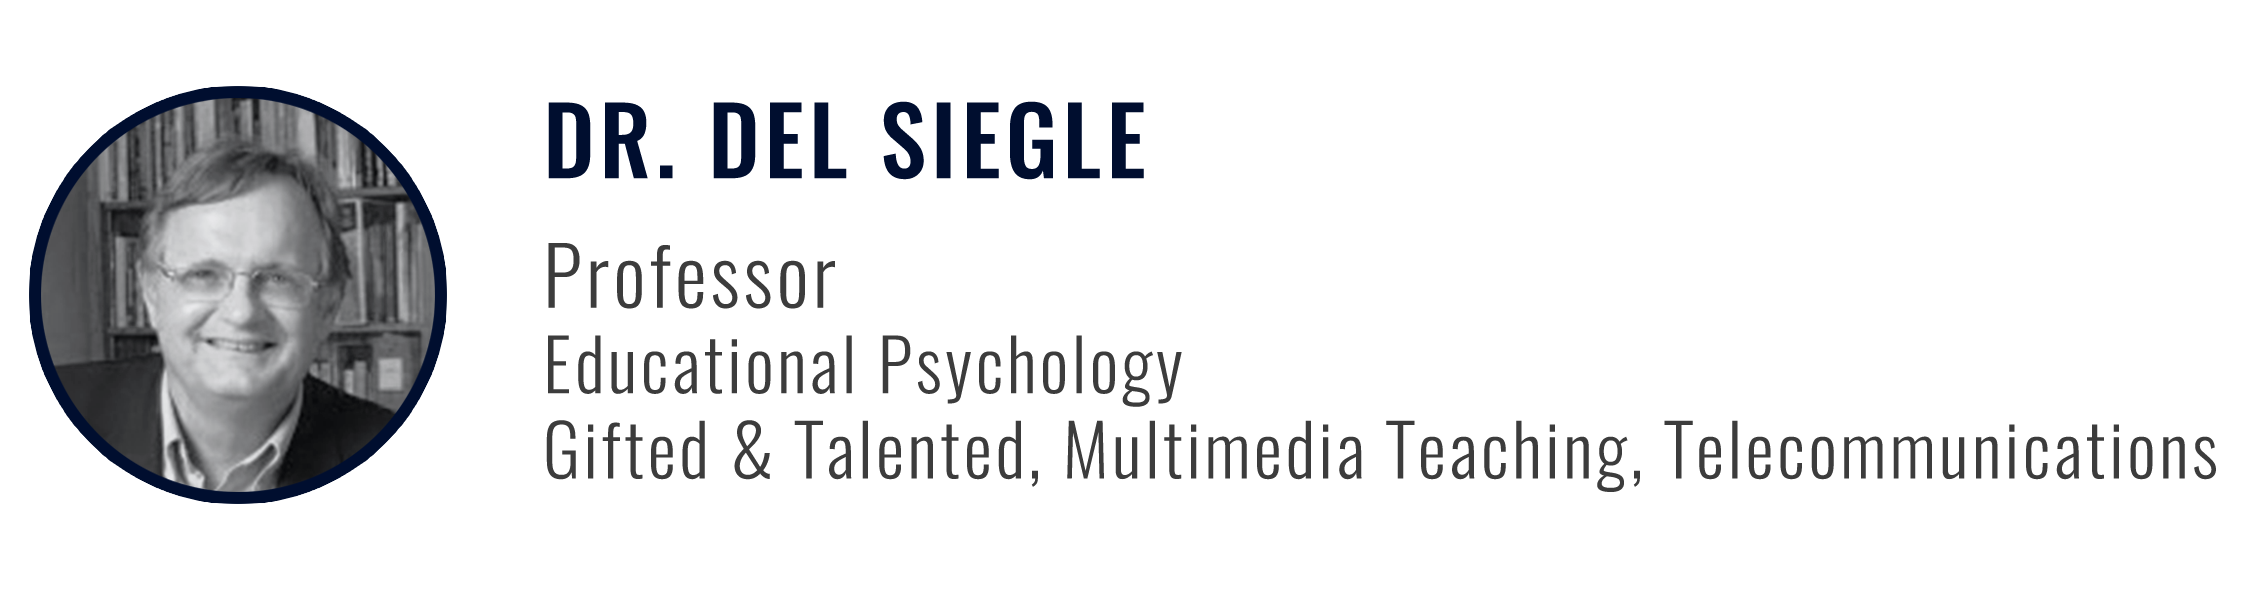 Dr. Del Siegle, Prof. Educational Psychology